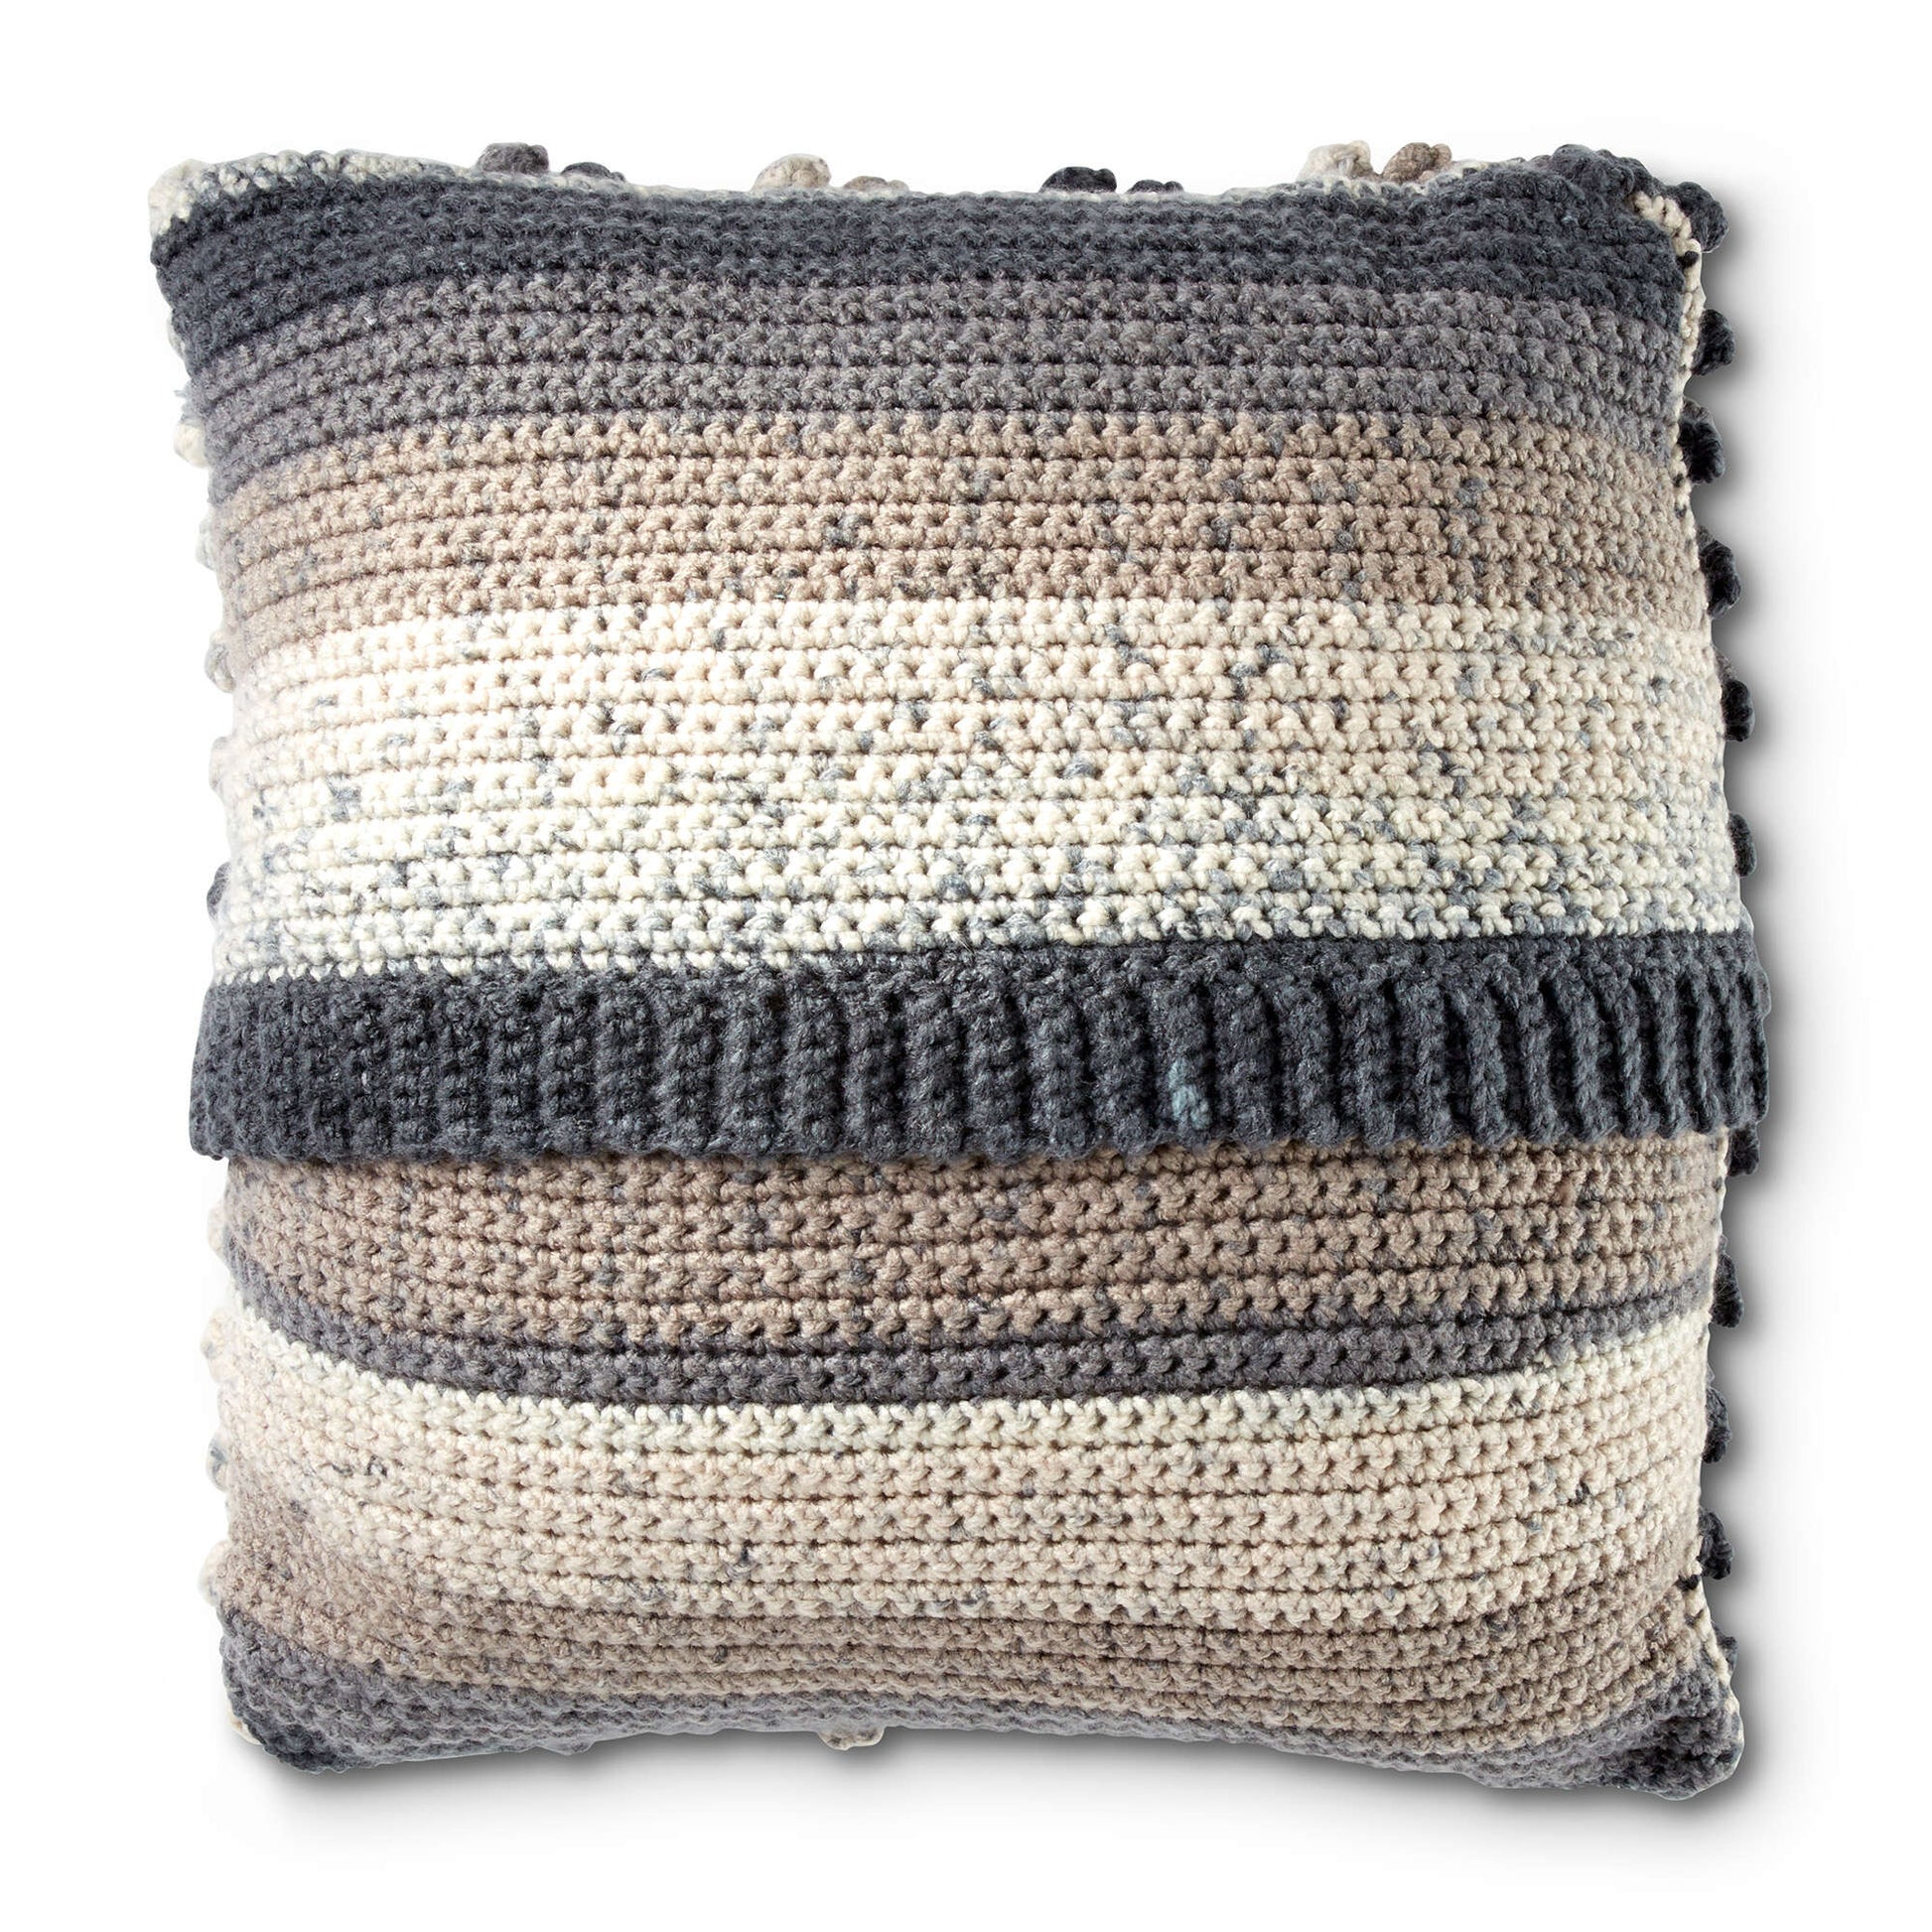 Free Caron Crochet Popcorn Pillow Pattern